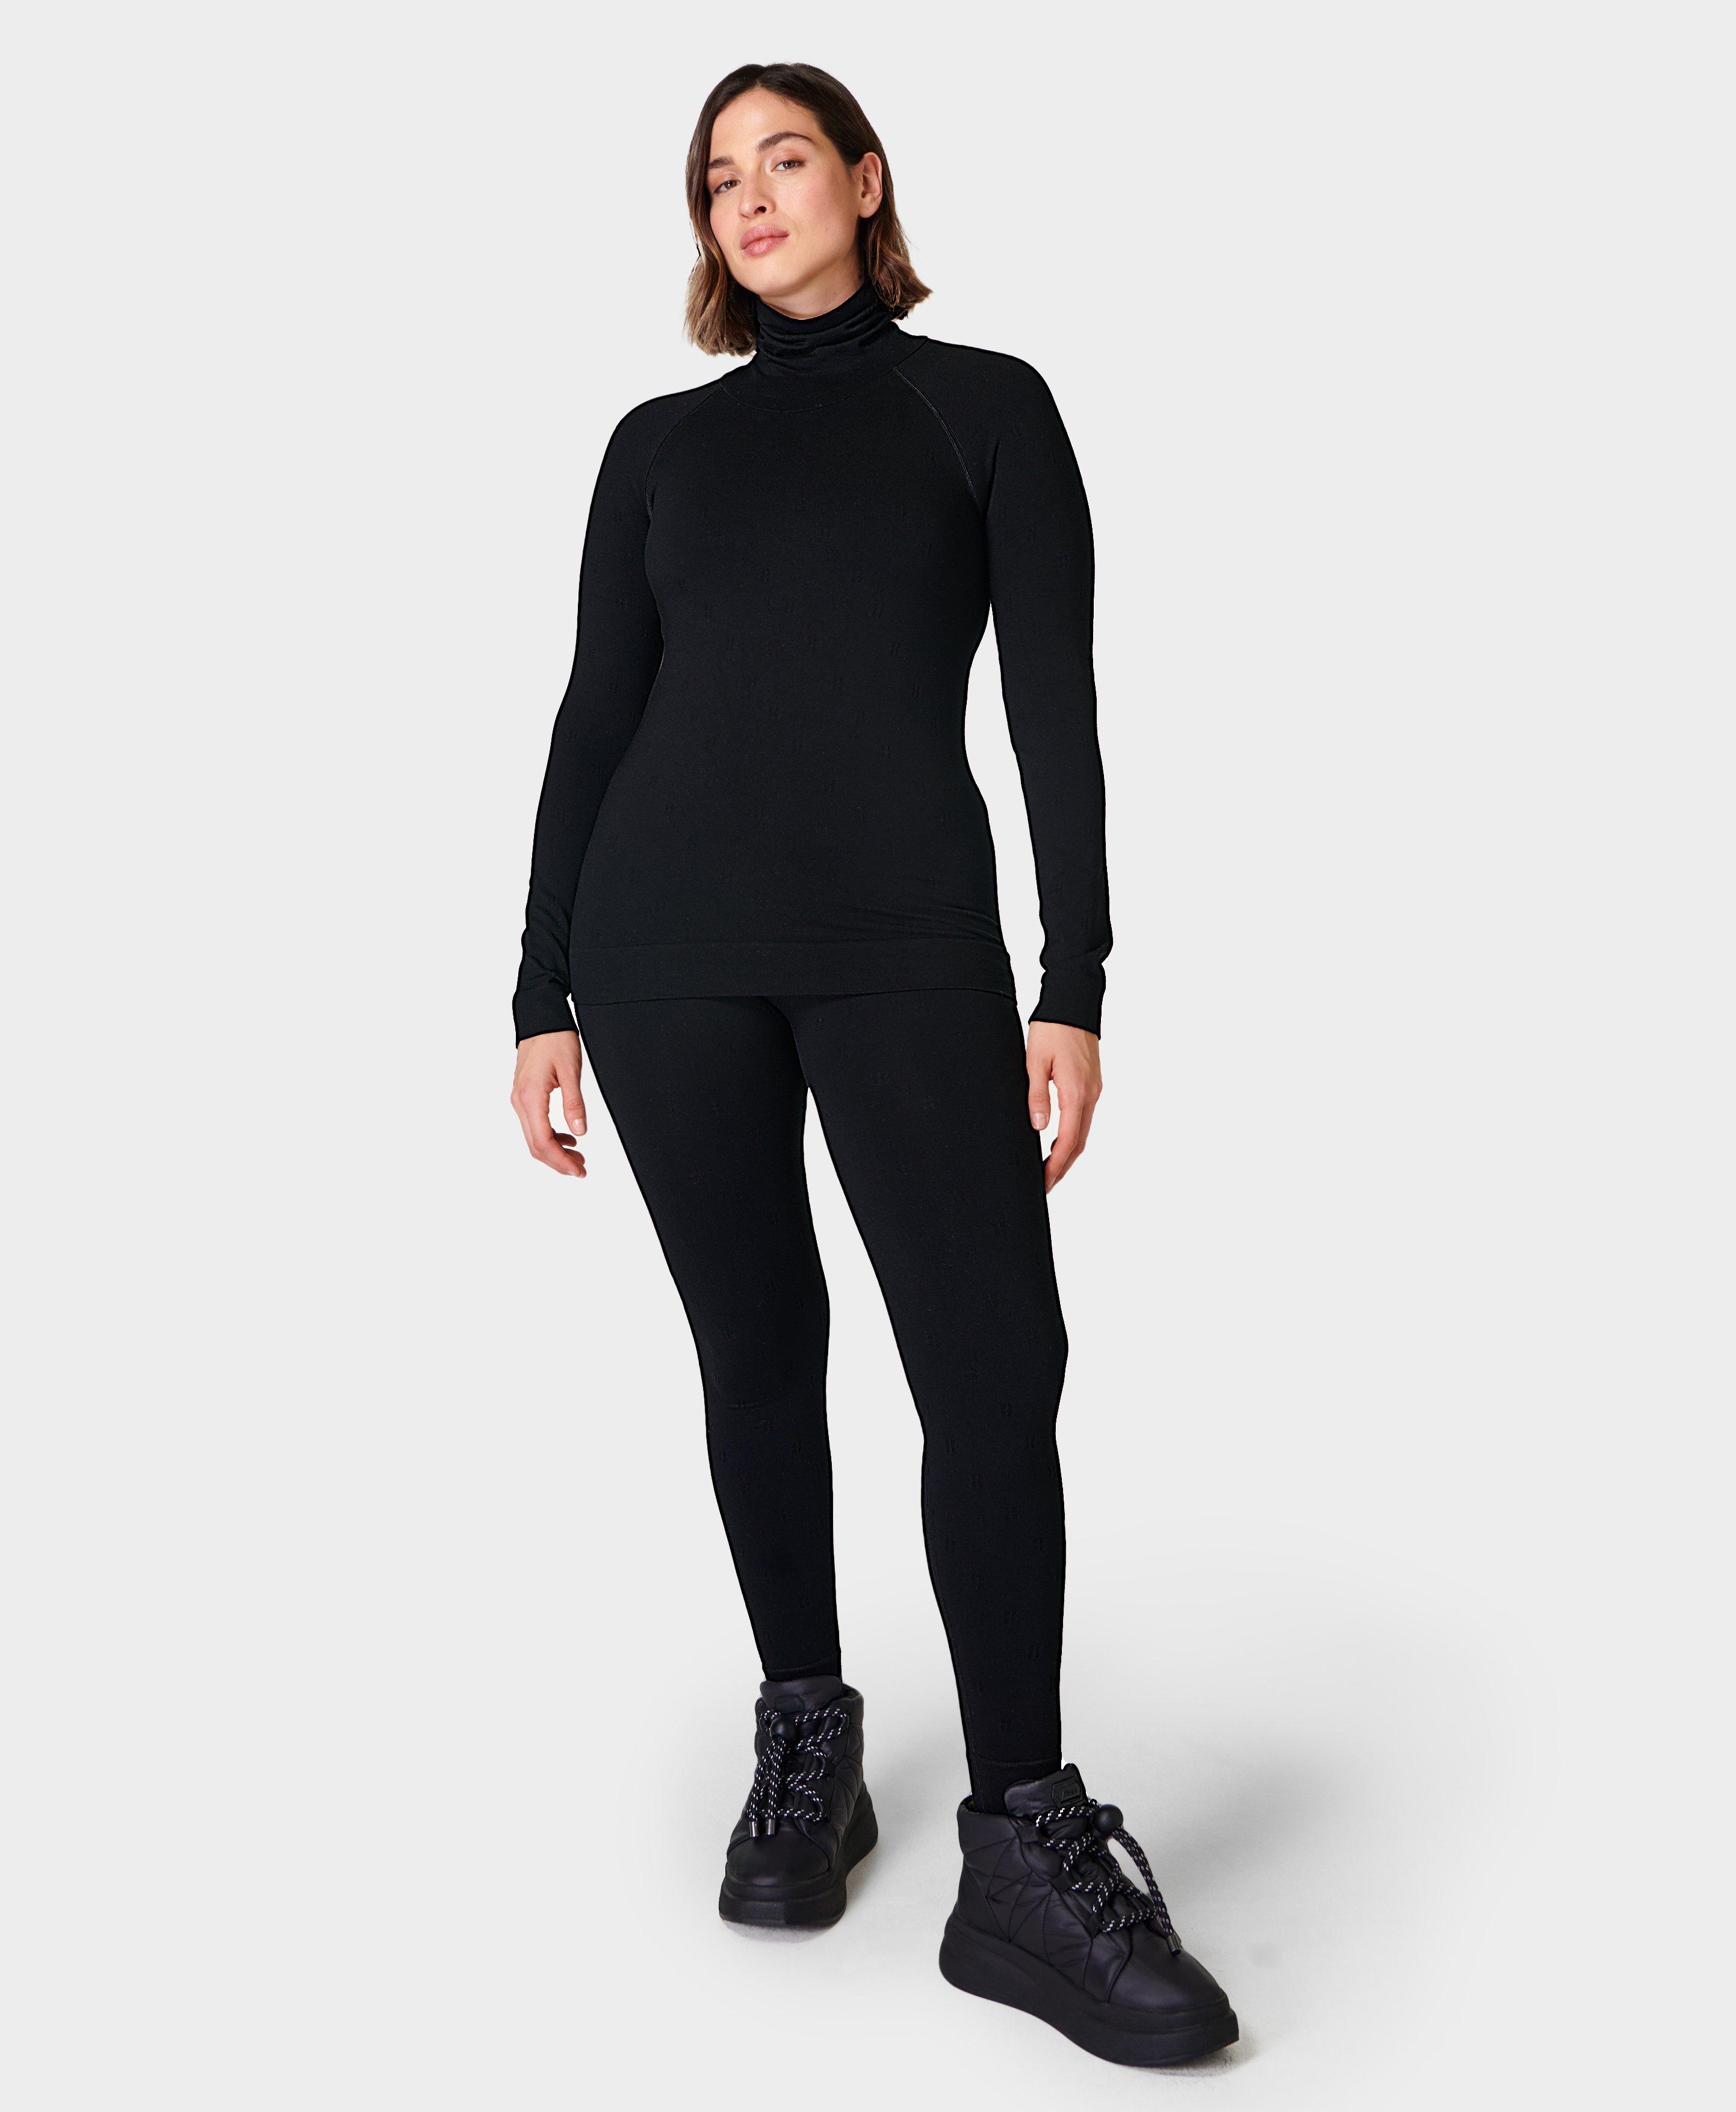 PISIQI Thermal Underwear Women Ultra-Soft Long Johns Set Base Layer Skiing  Winter Warm Top & Bottom Black